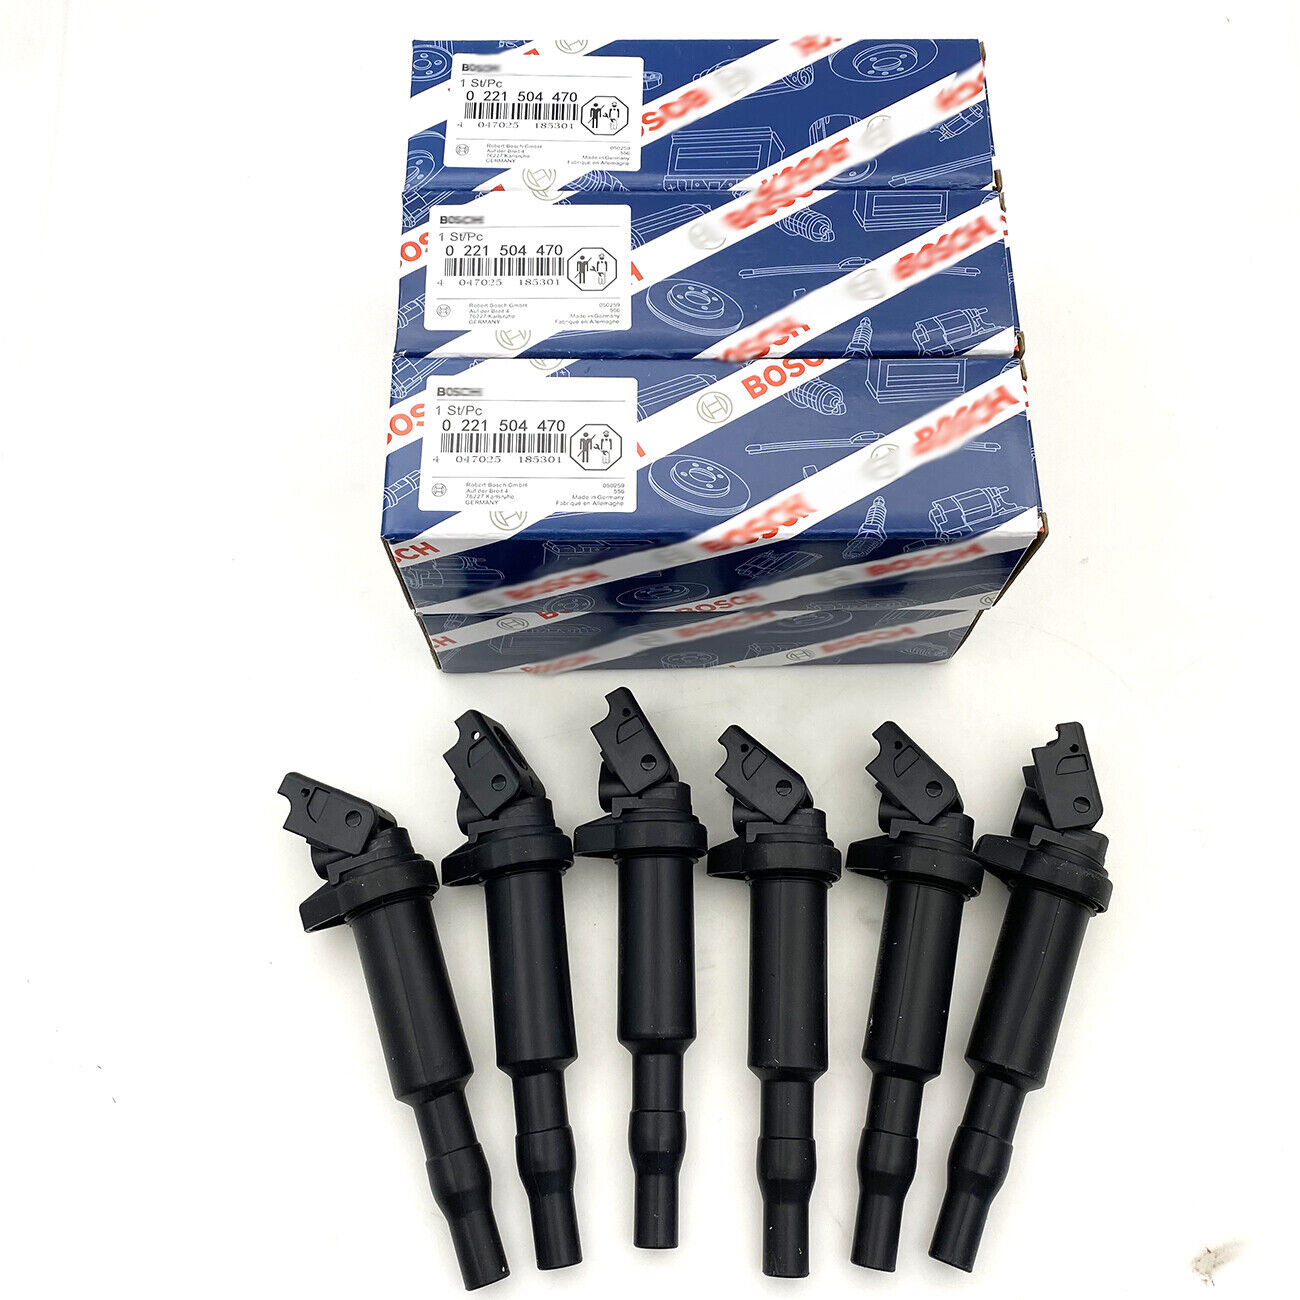 6X Ignition Coils 0221504470 Fits For BMW 3 5 Series x3 x5 z4 325i 328i UF592